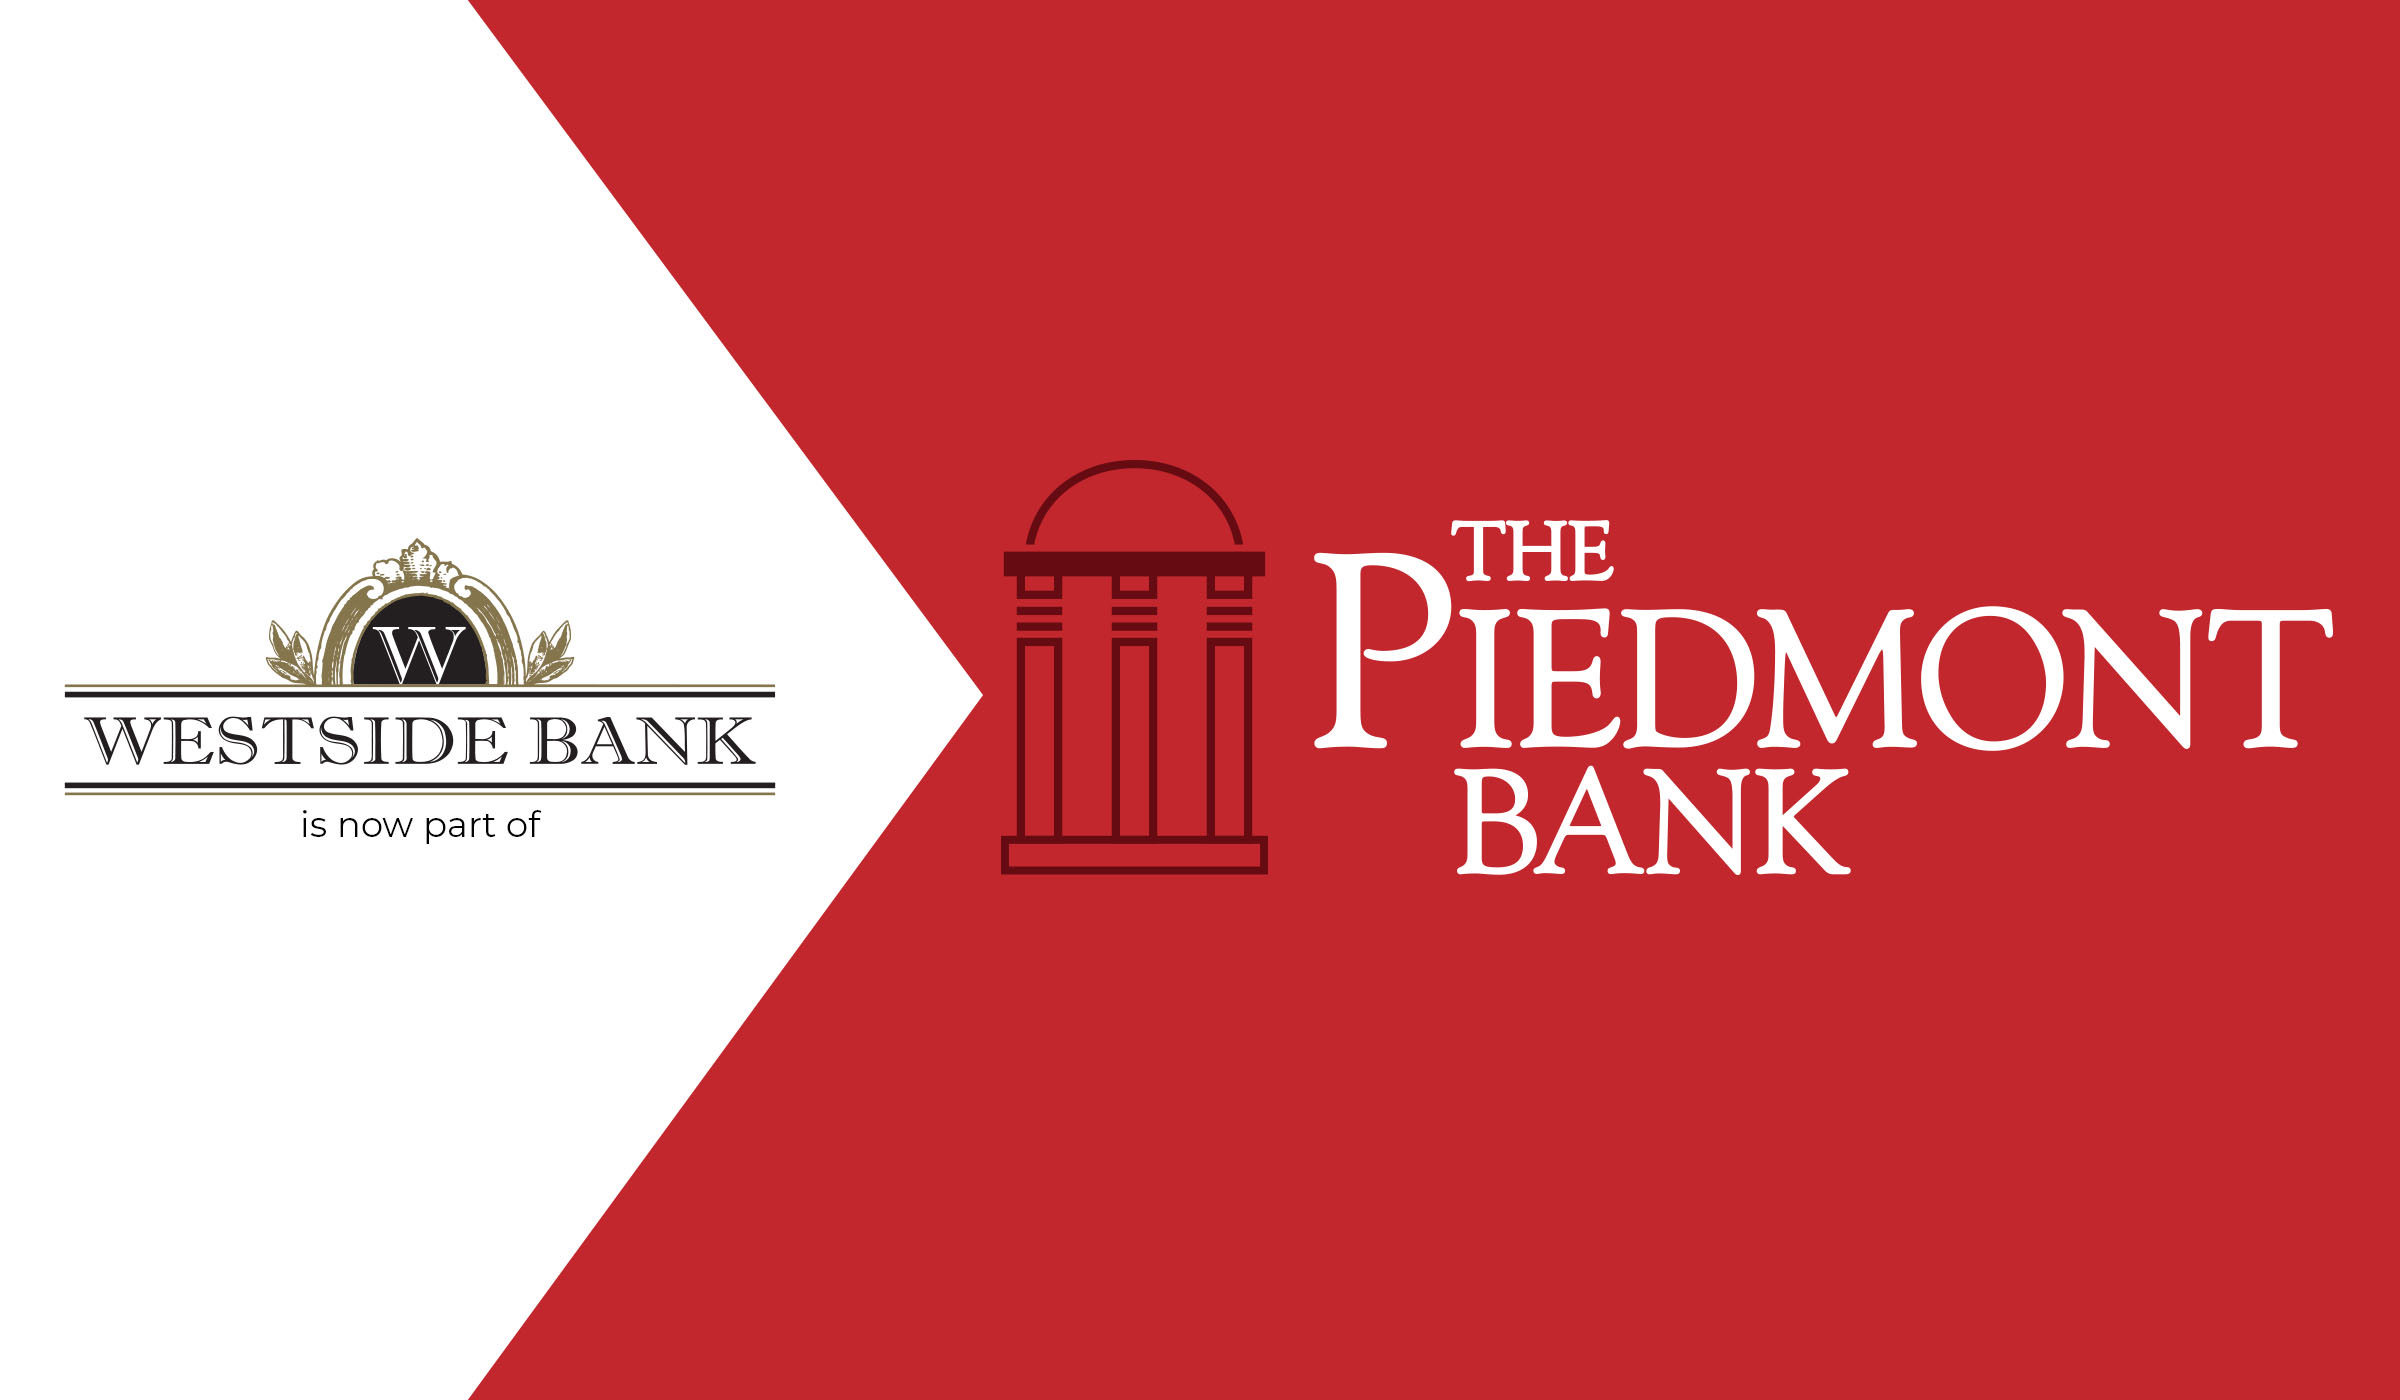 The Piedmont Bank Acquiring WestSide Bank